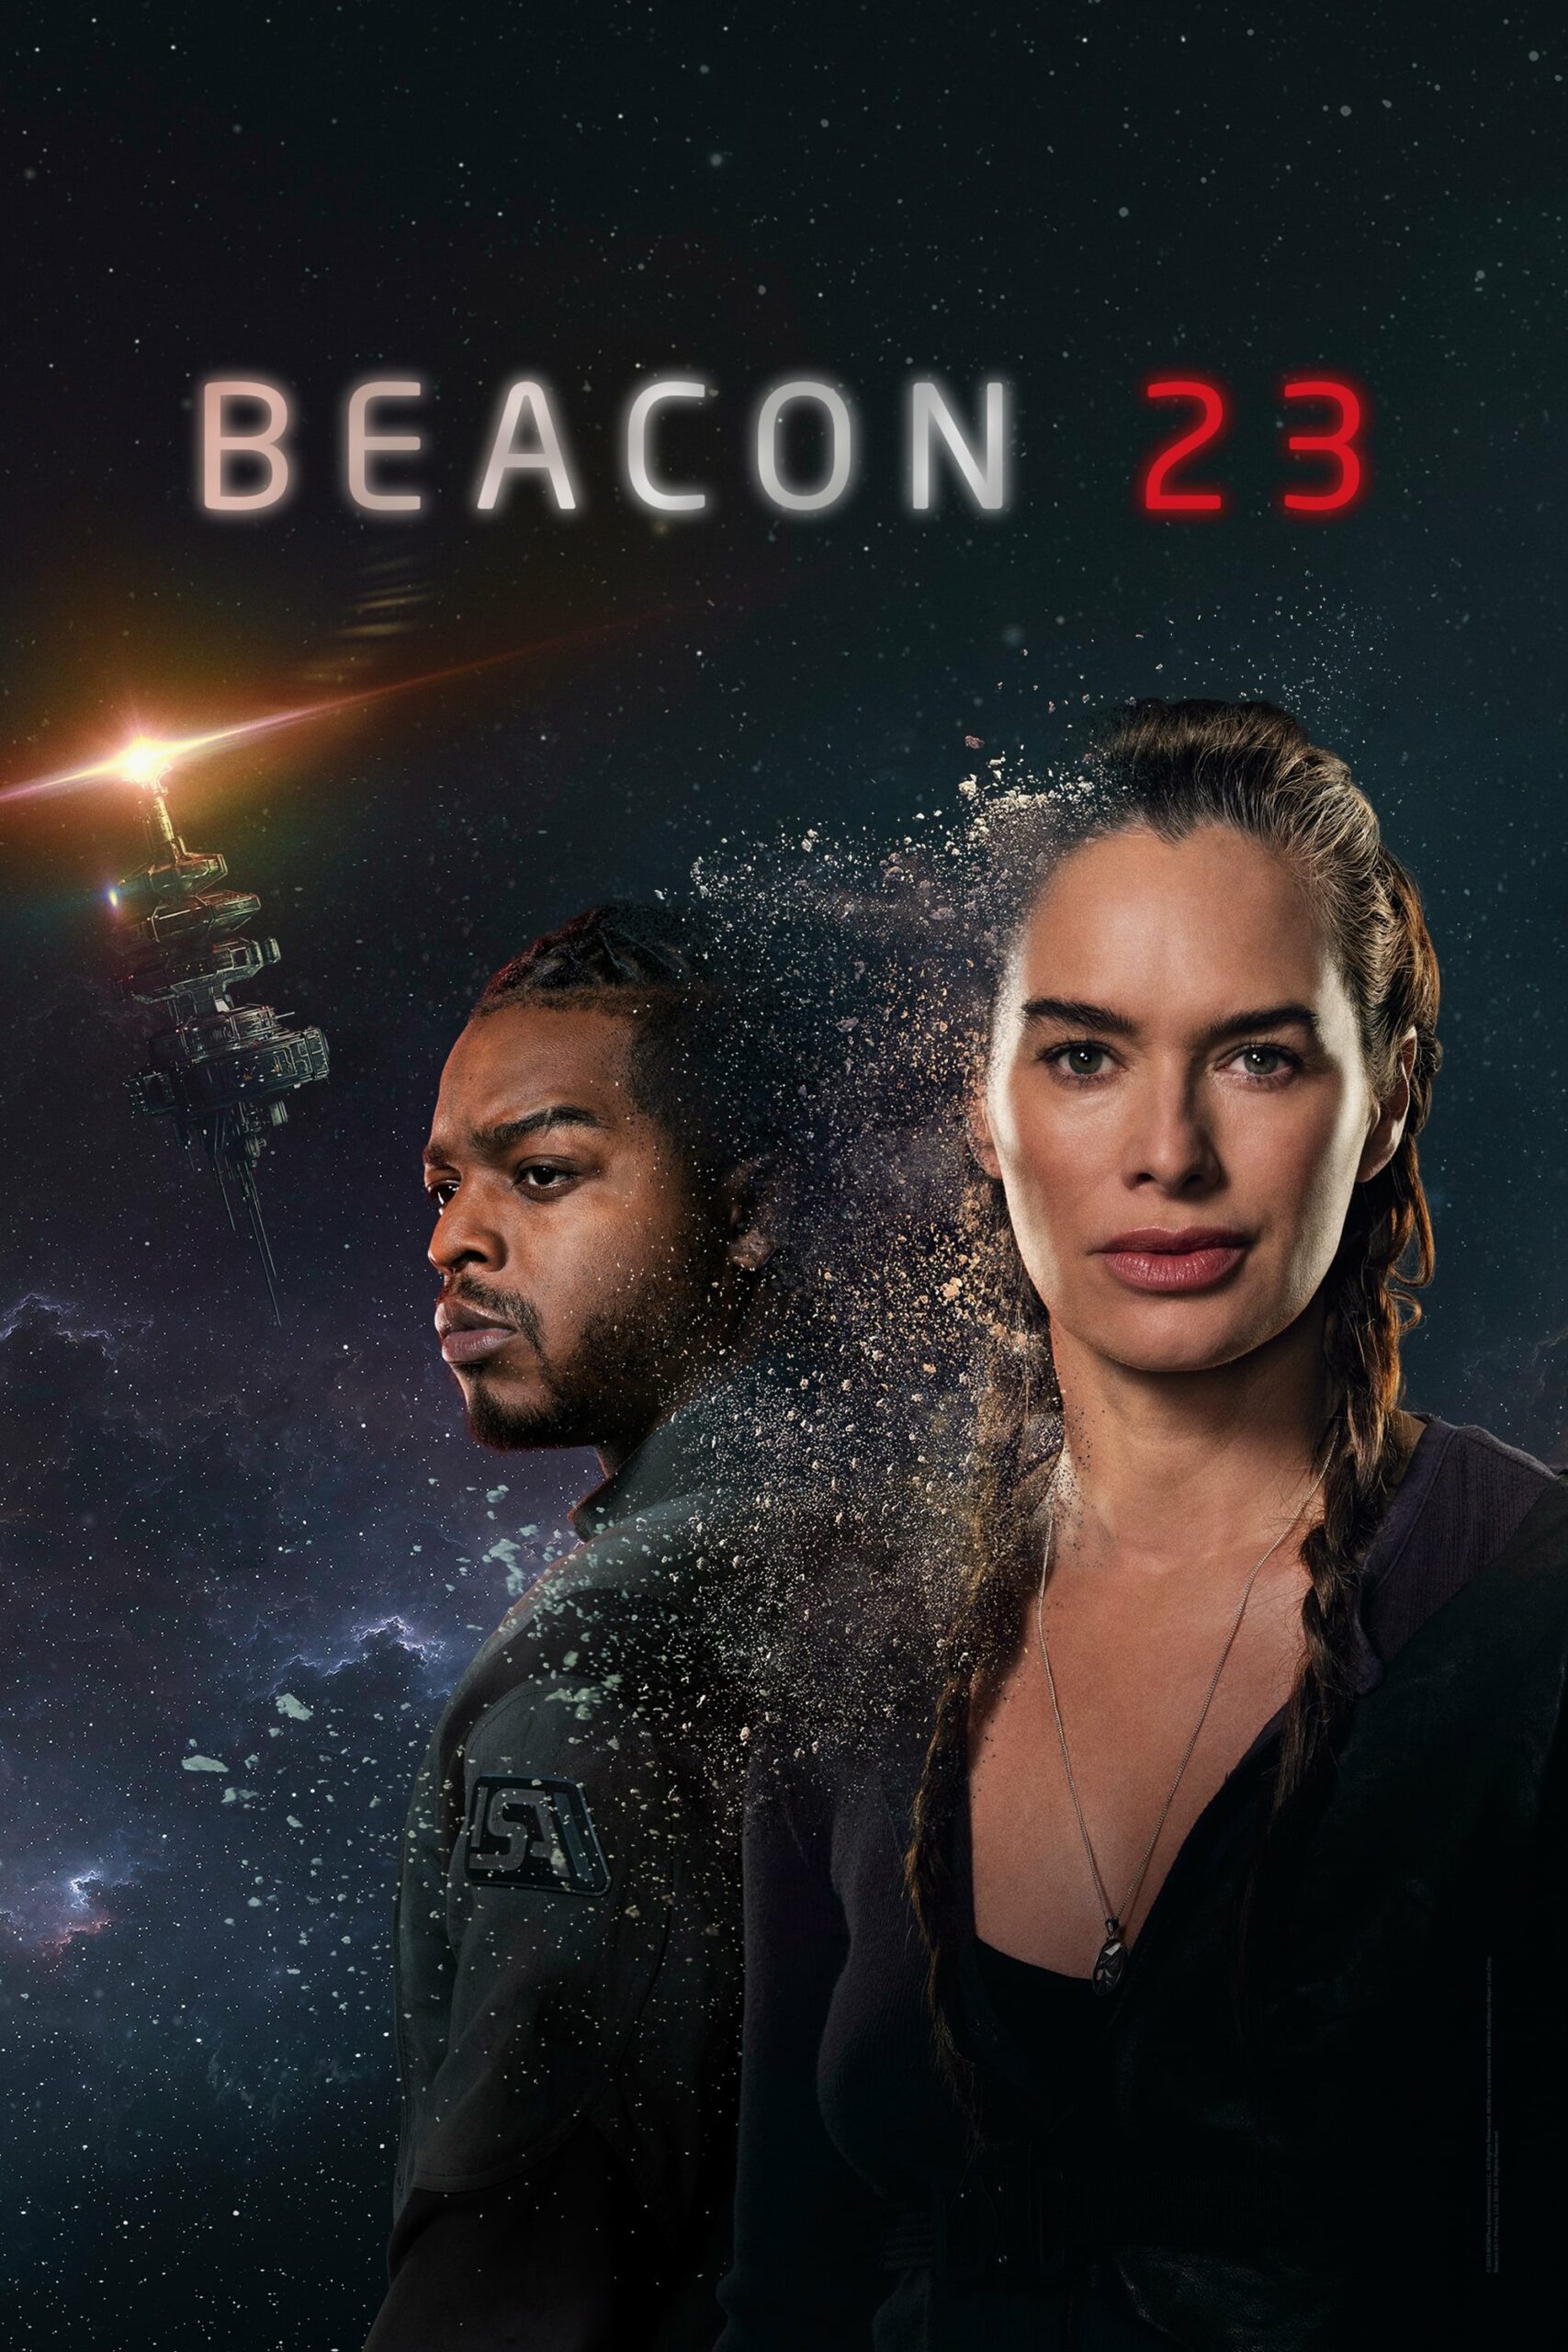 Plakát pro film “Beacon 23”